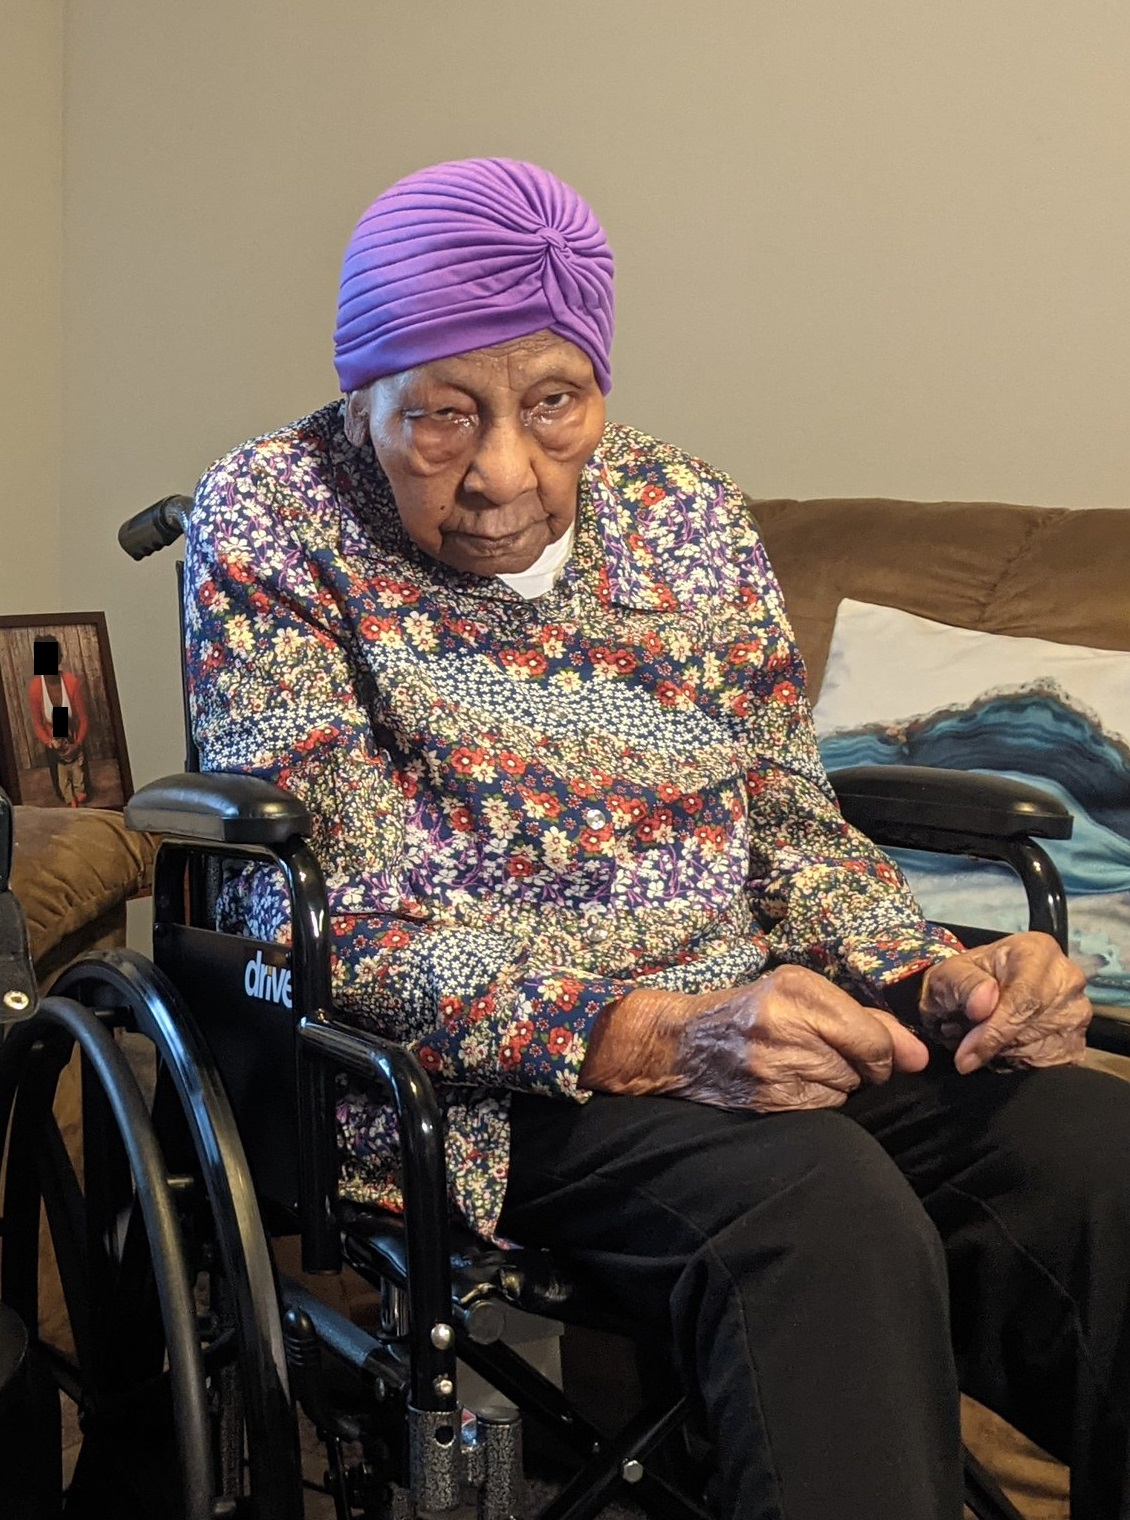 On her 109th birthday. (Source: Twitter/Ian Ripple)